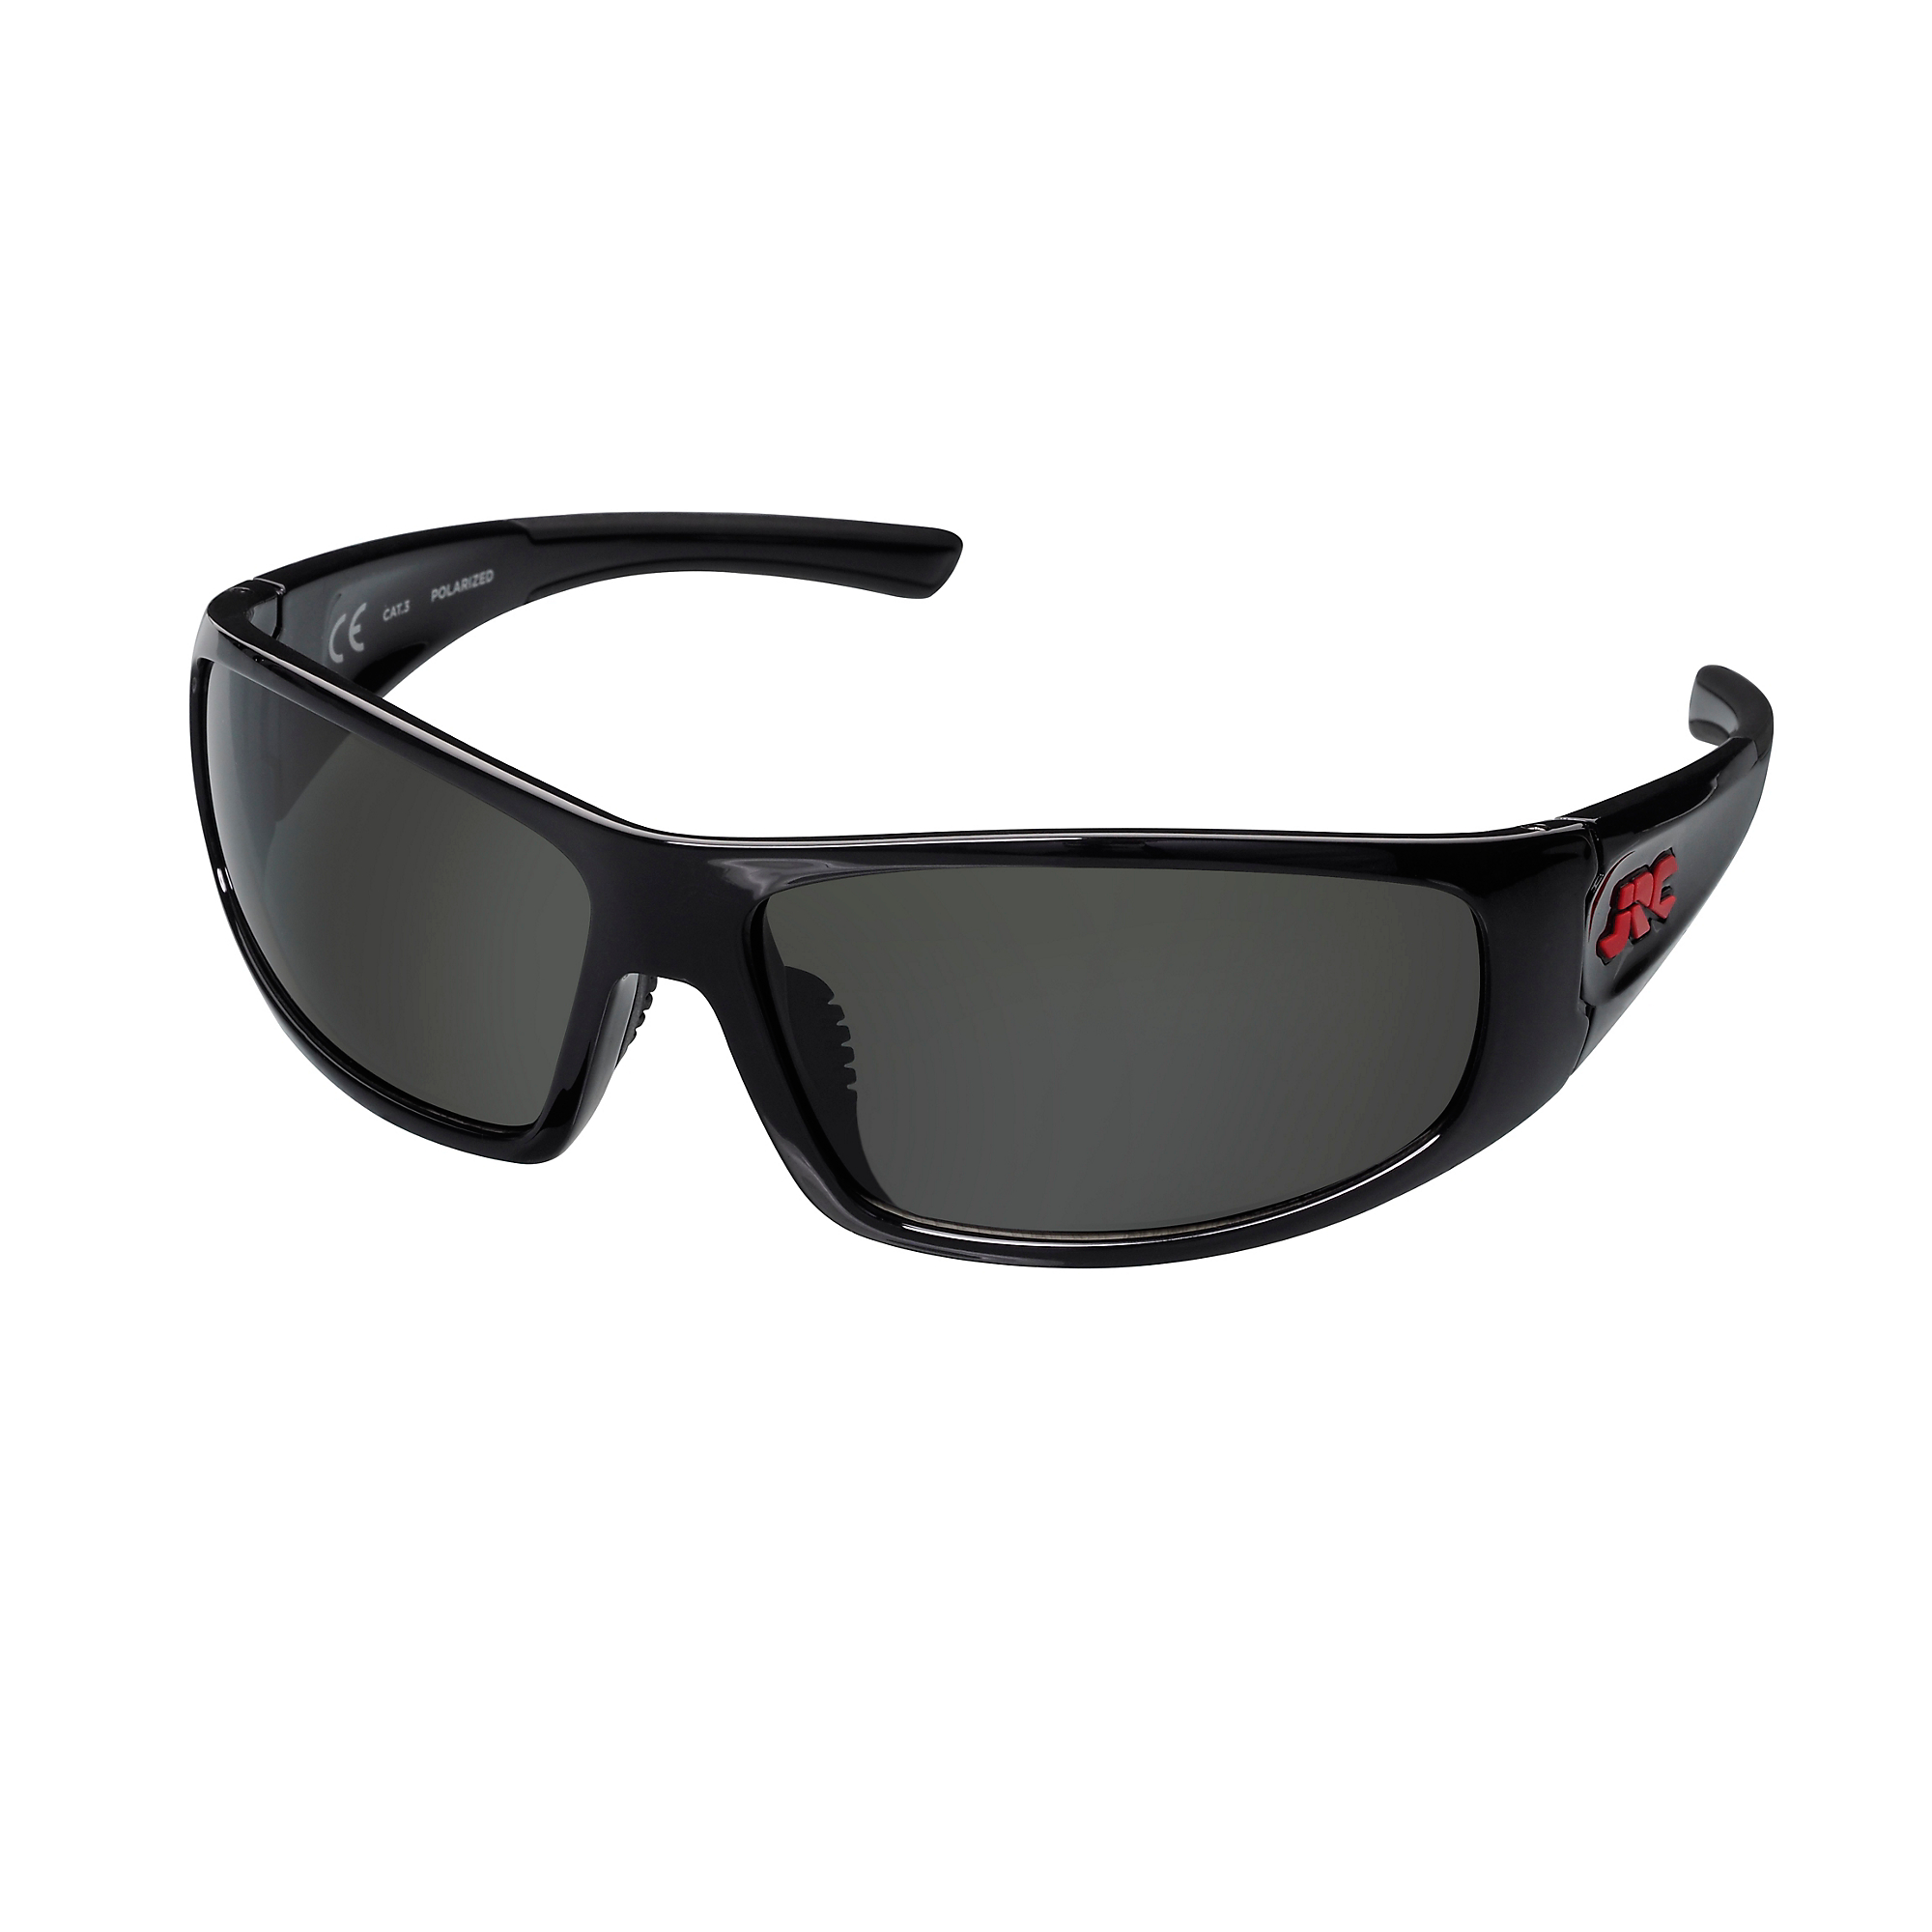 JRC Stealth Sunglasses - Black - Smoke